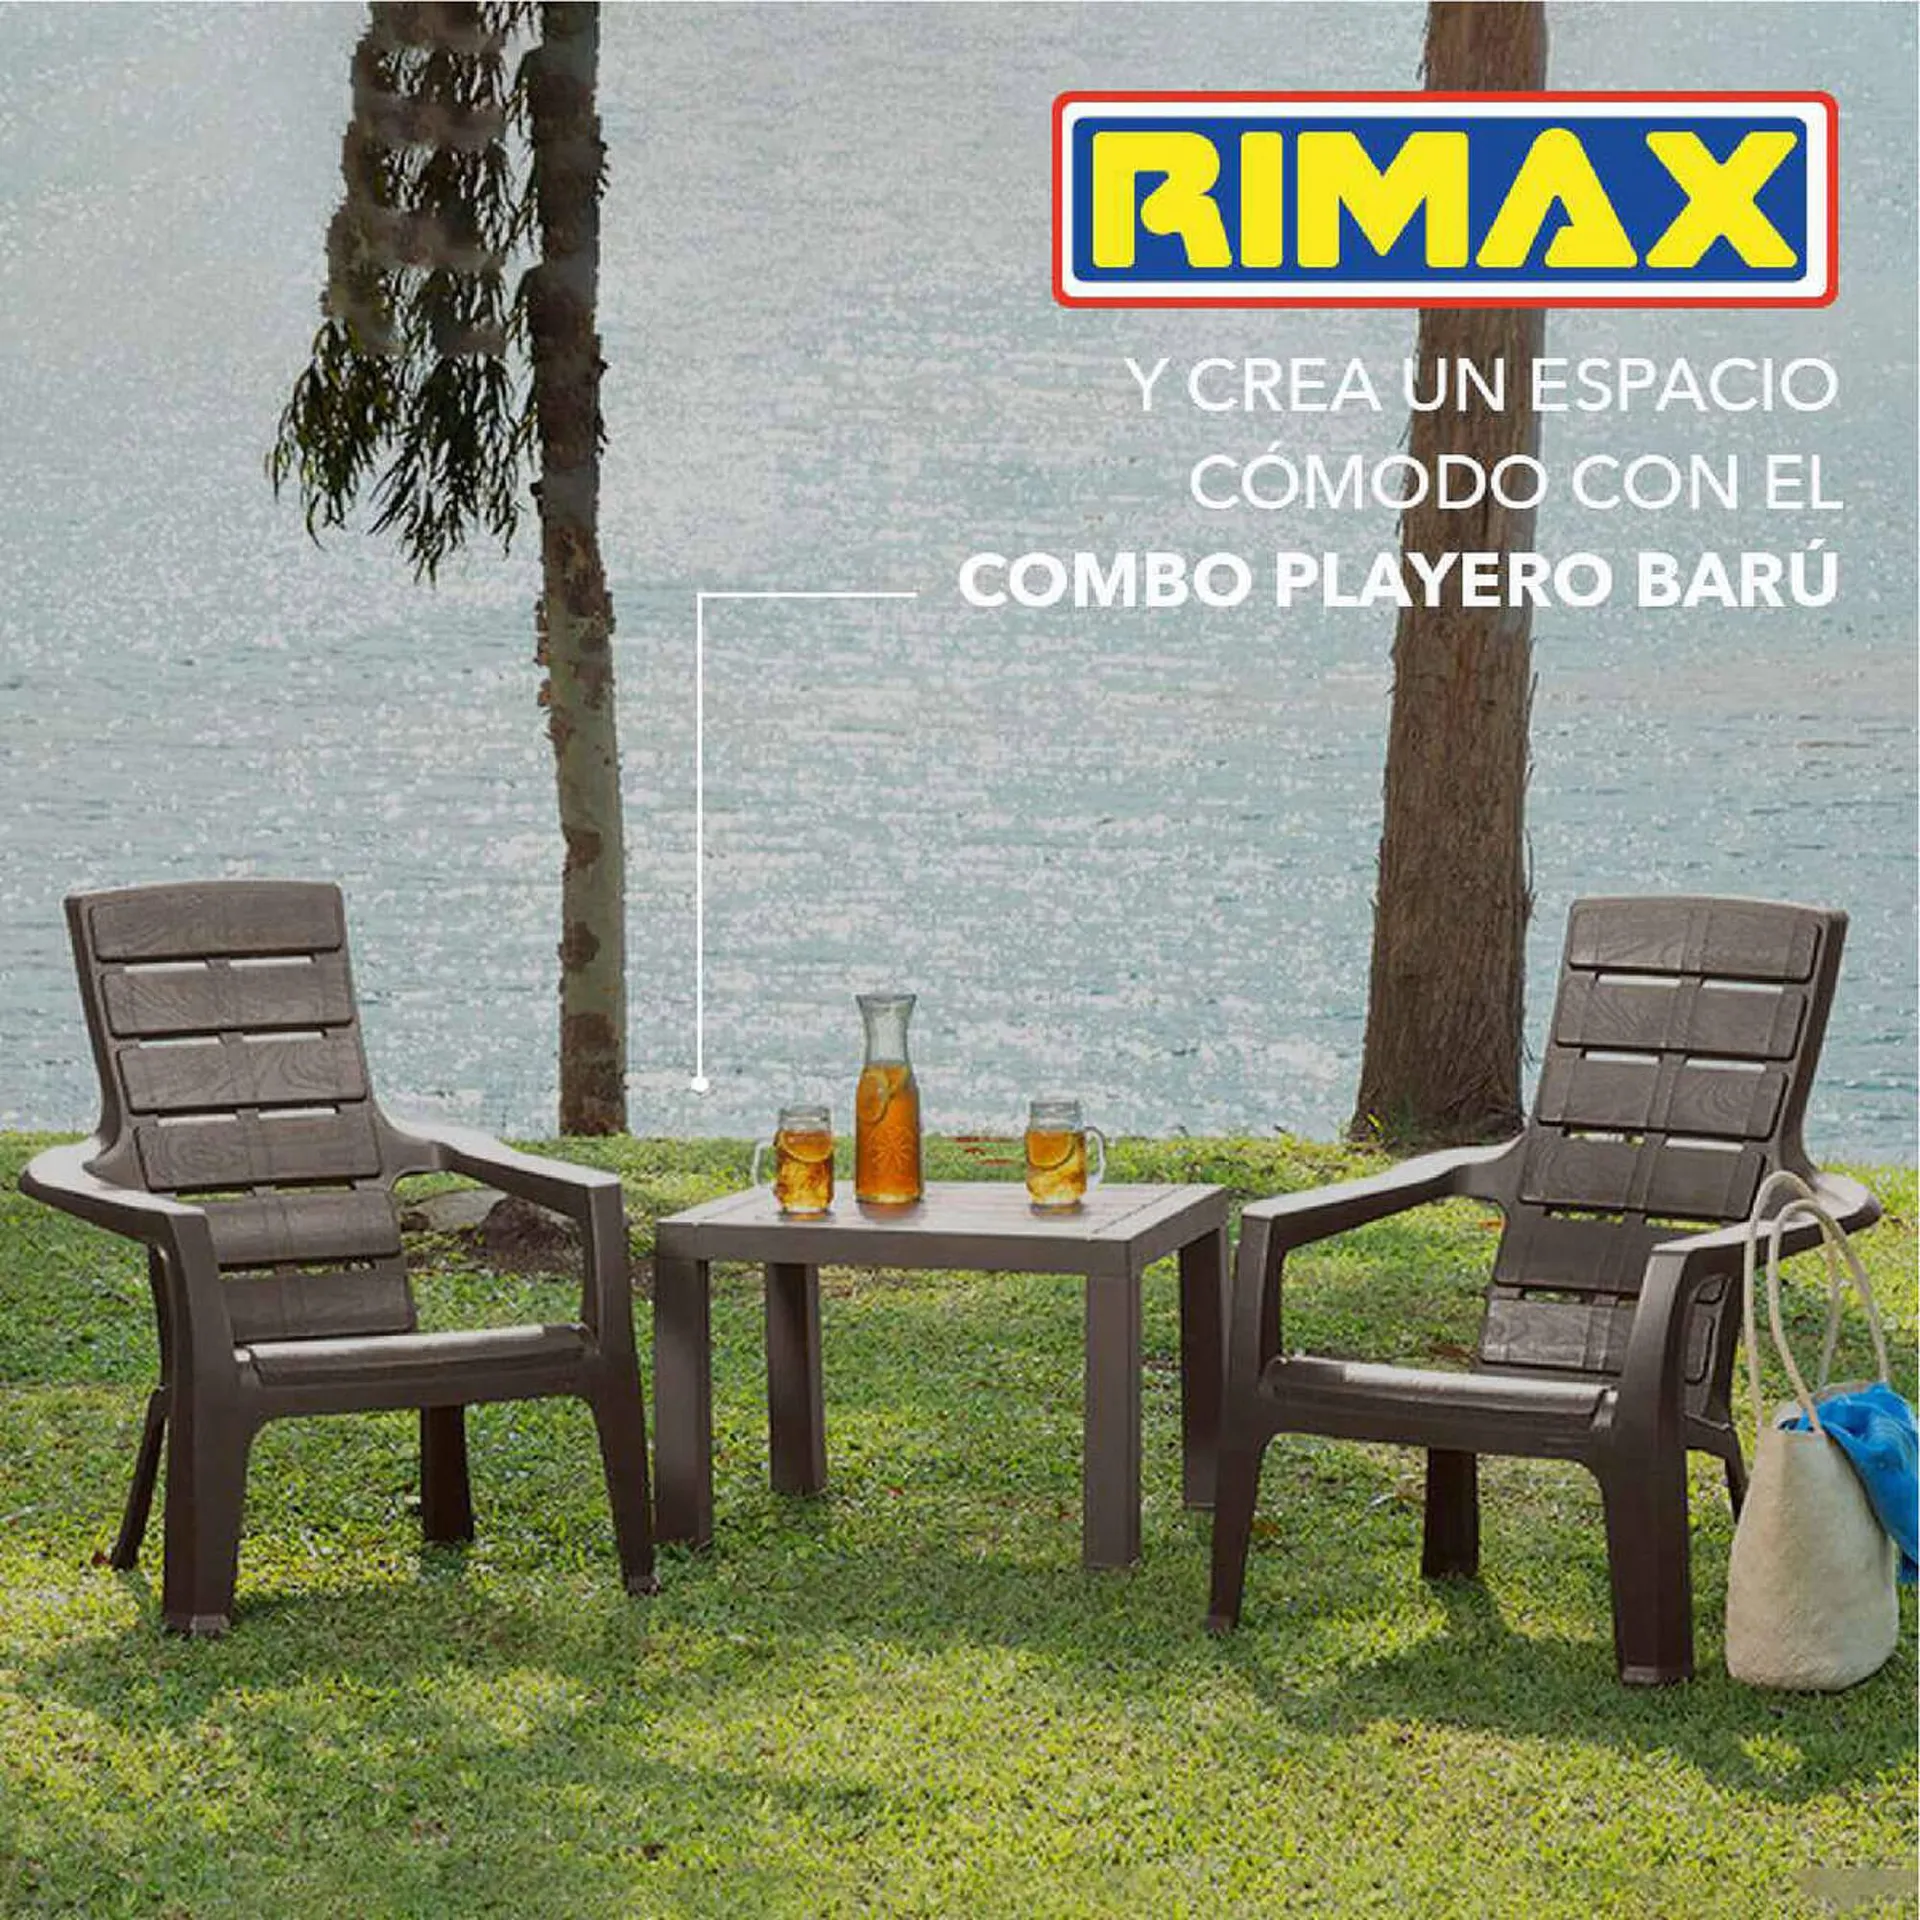 Catálogo Rimax - 3